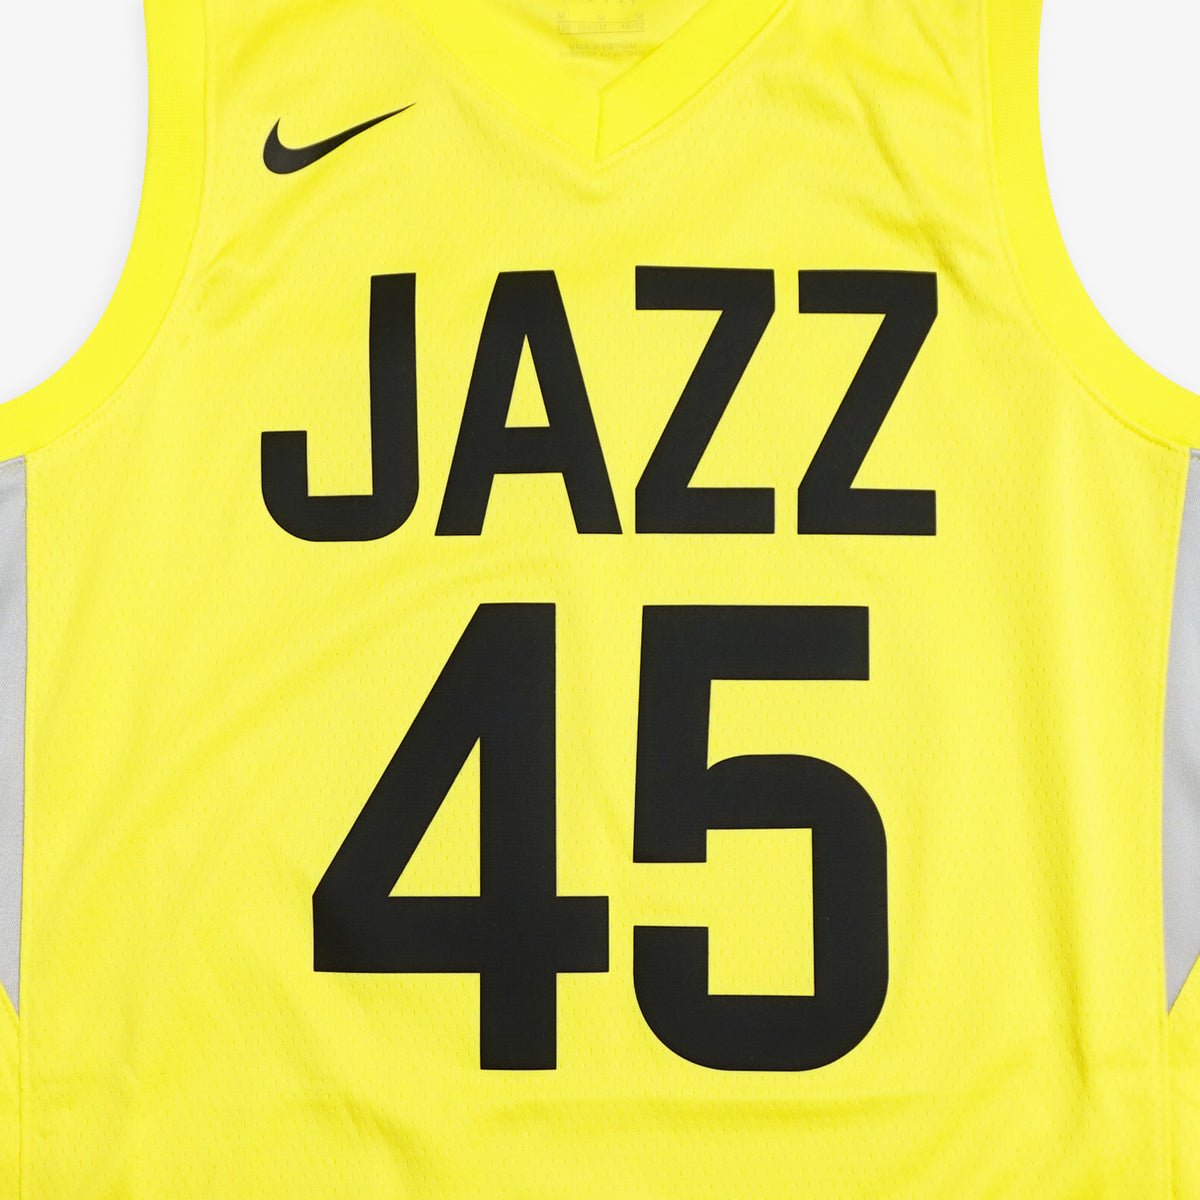 Donovan Mitchell Utah Jazz Throwback Jersey Size S